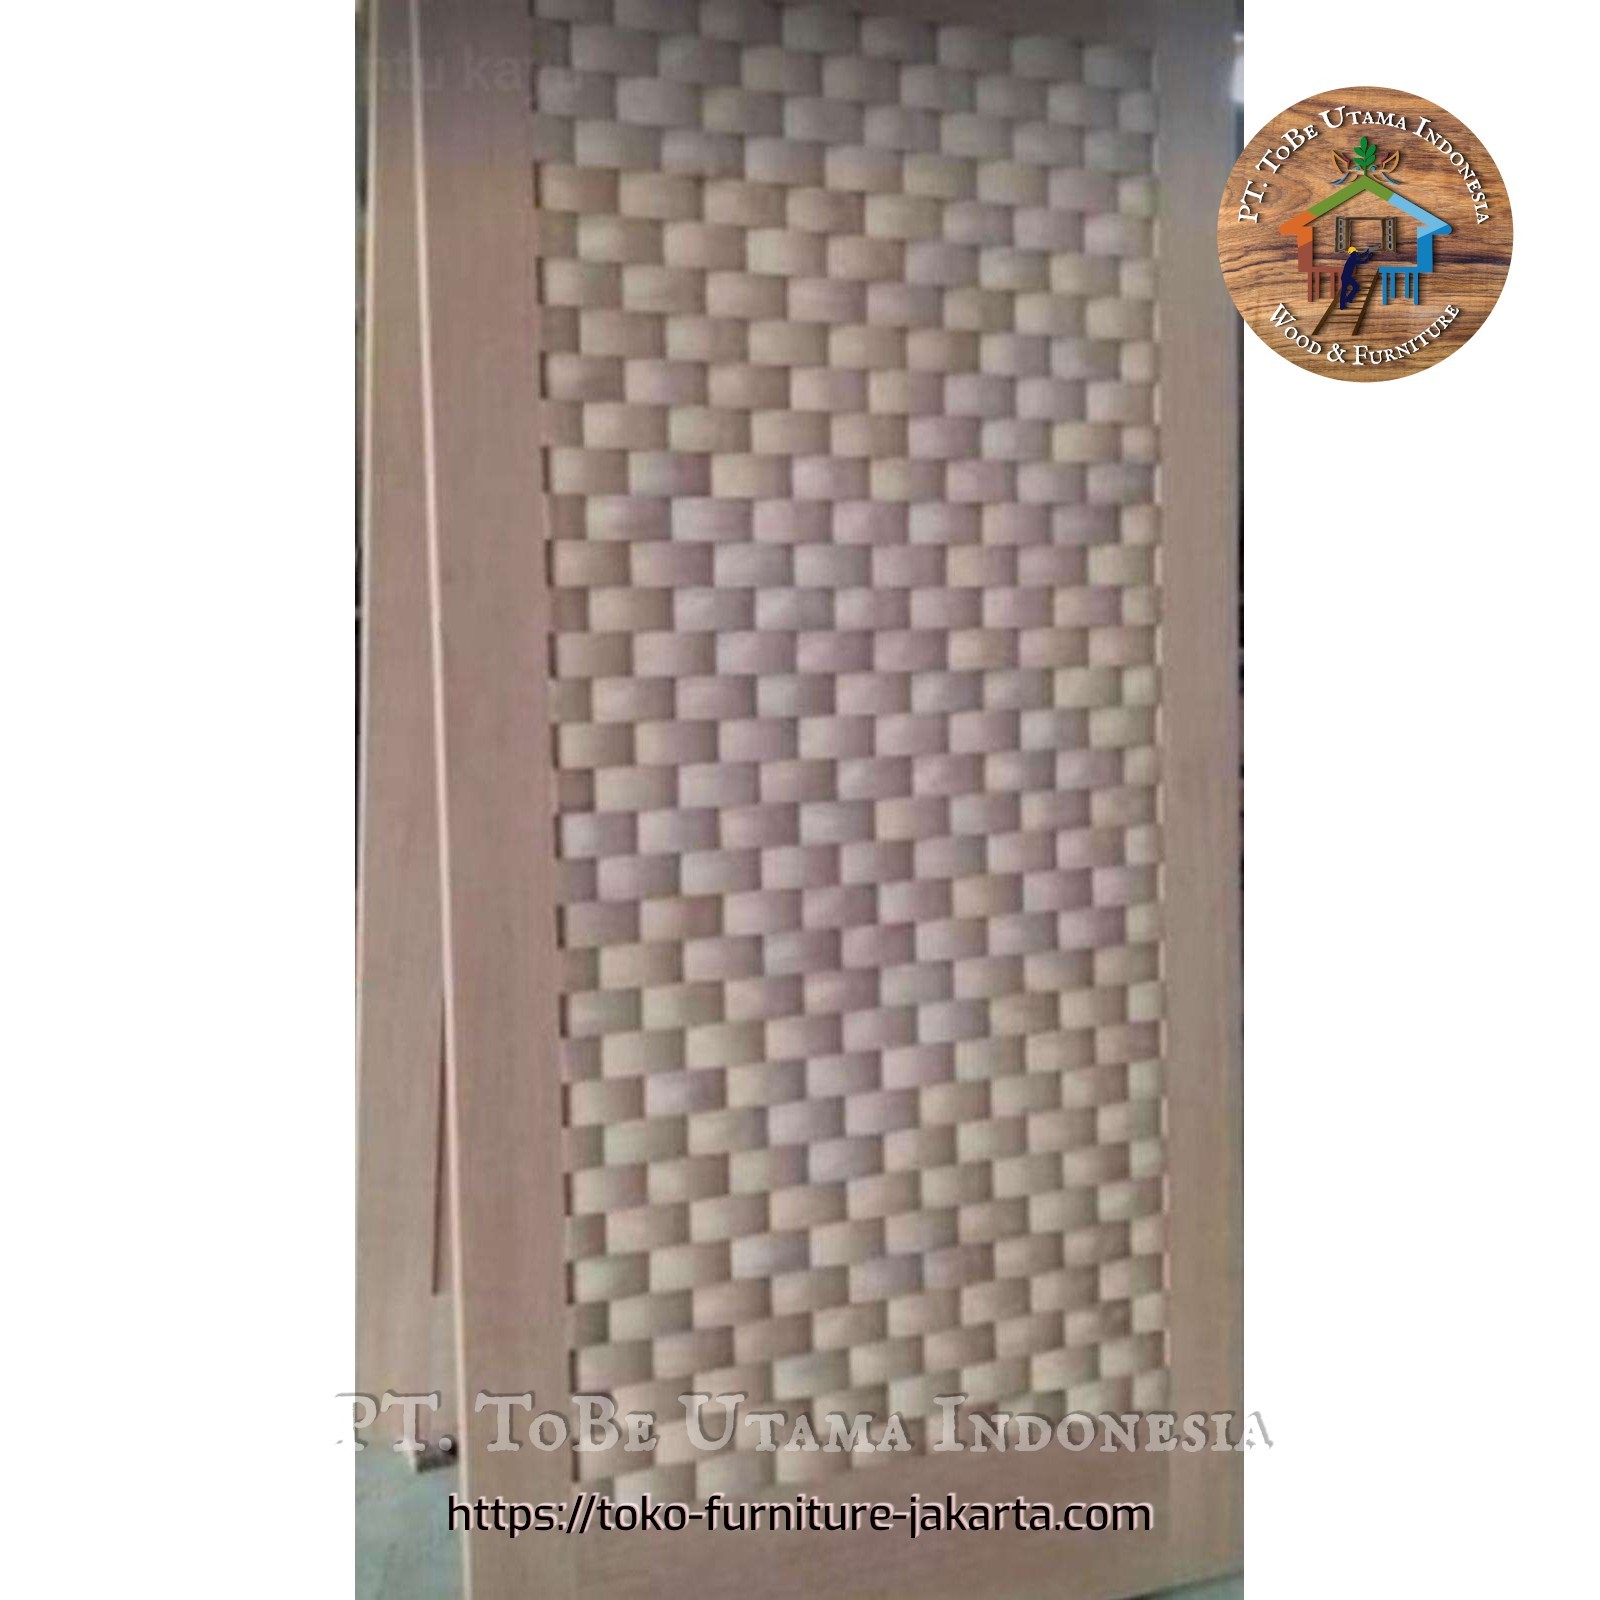 Doors: Pagar Modern Door made of mahogany wood, meranti wood (image 1 of 1).